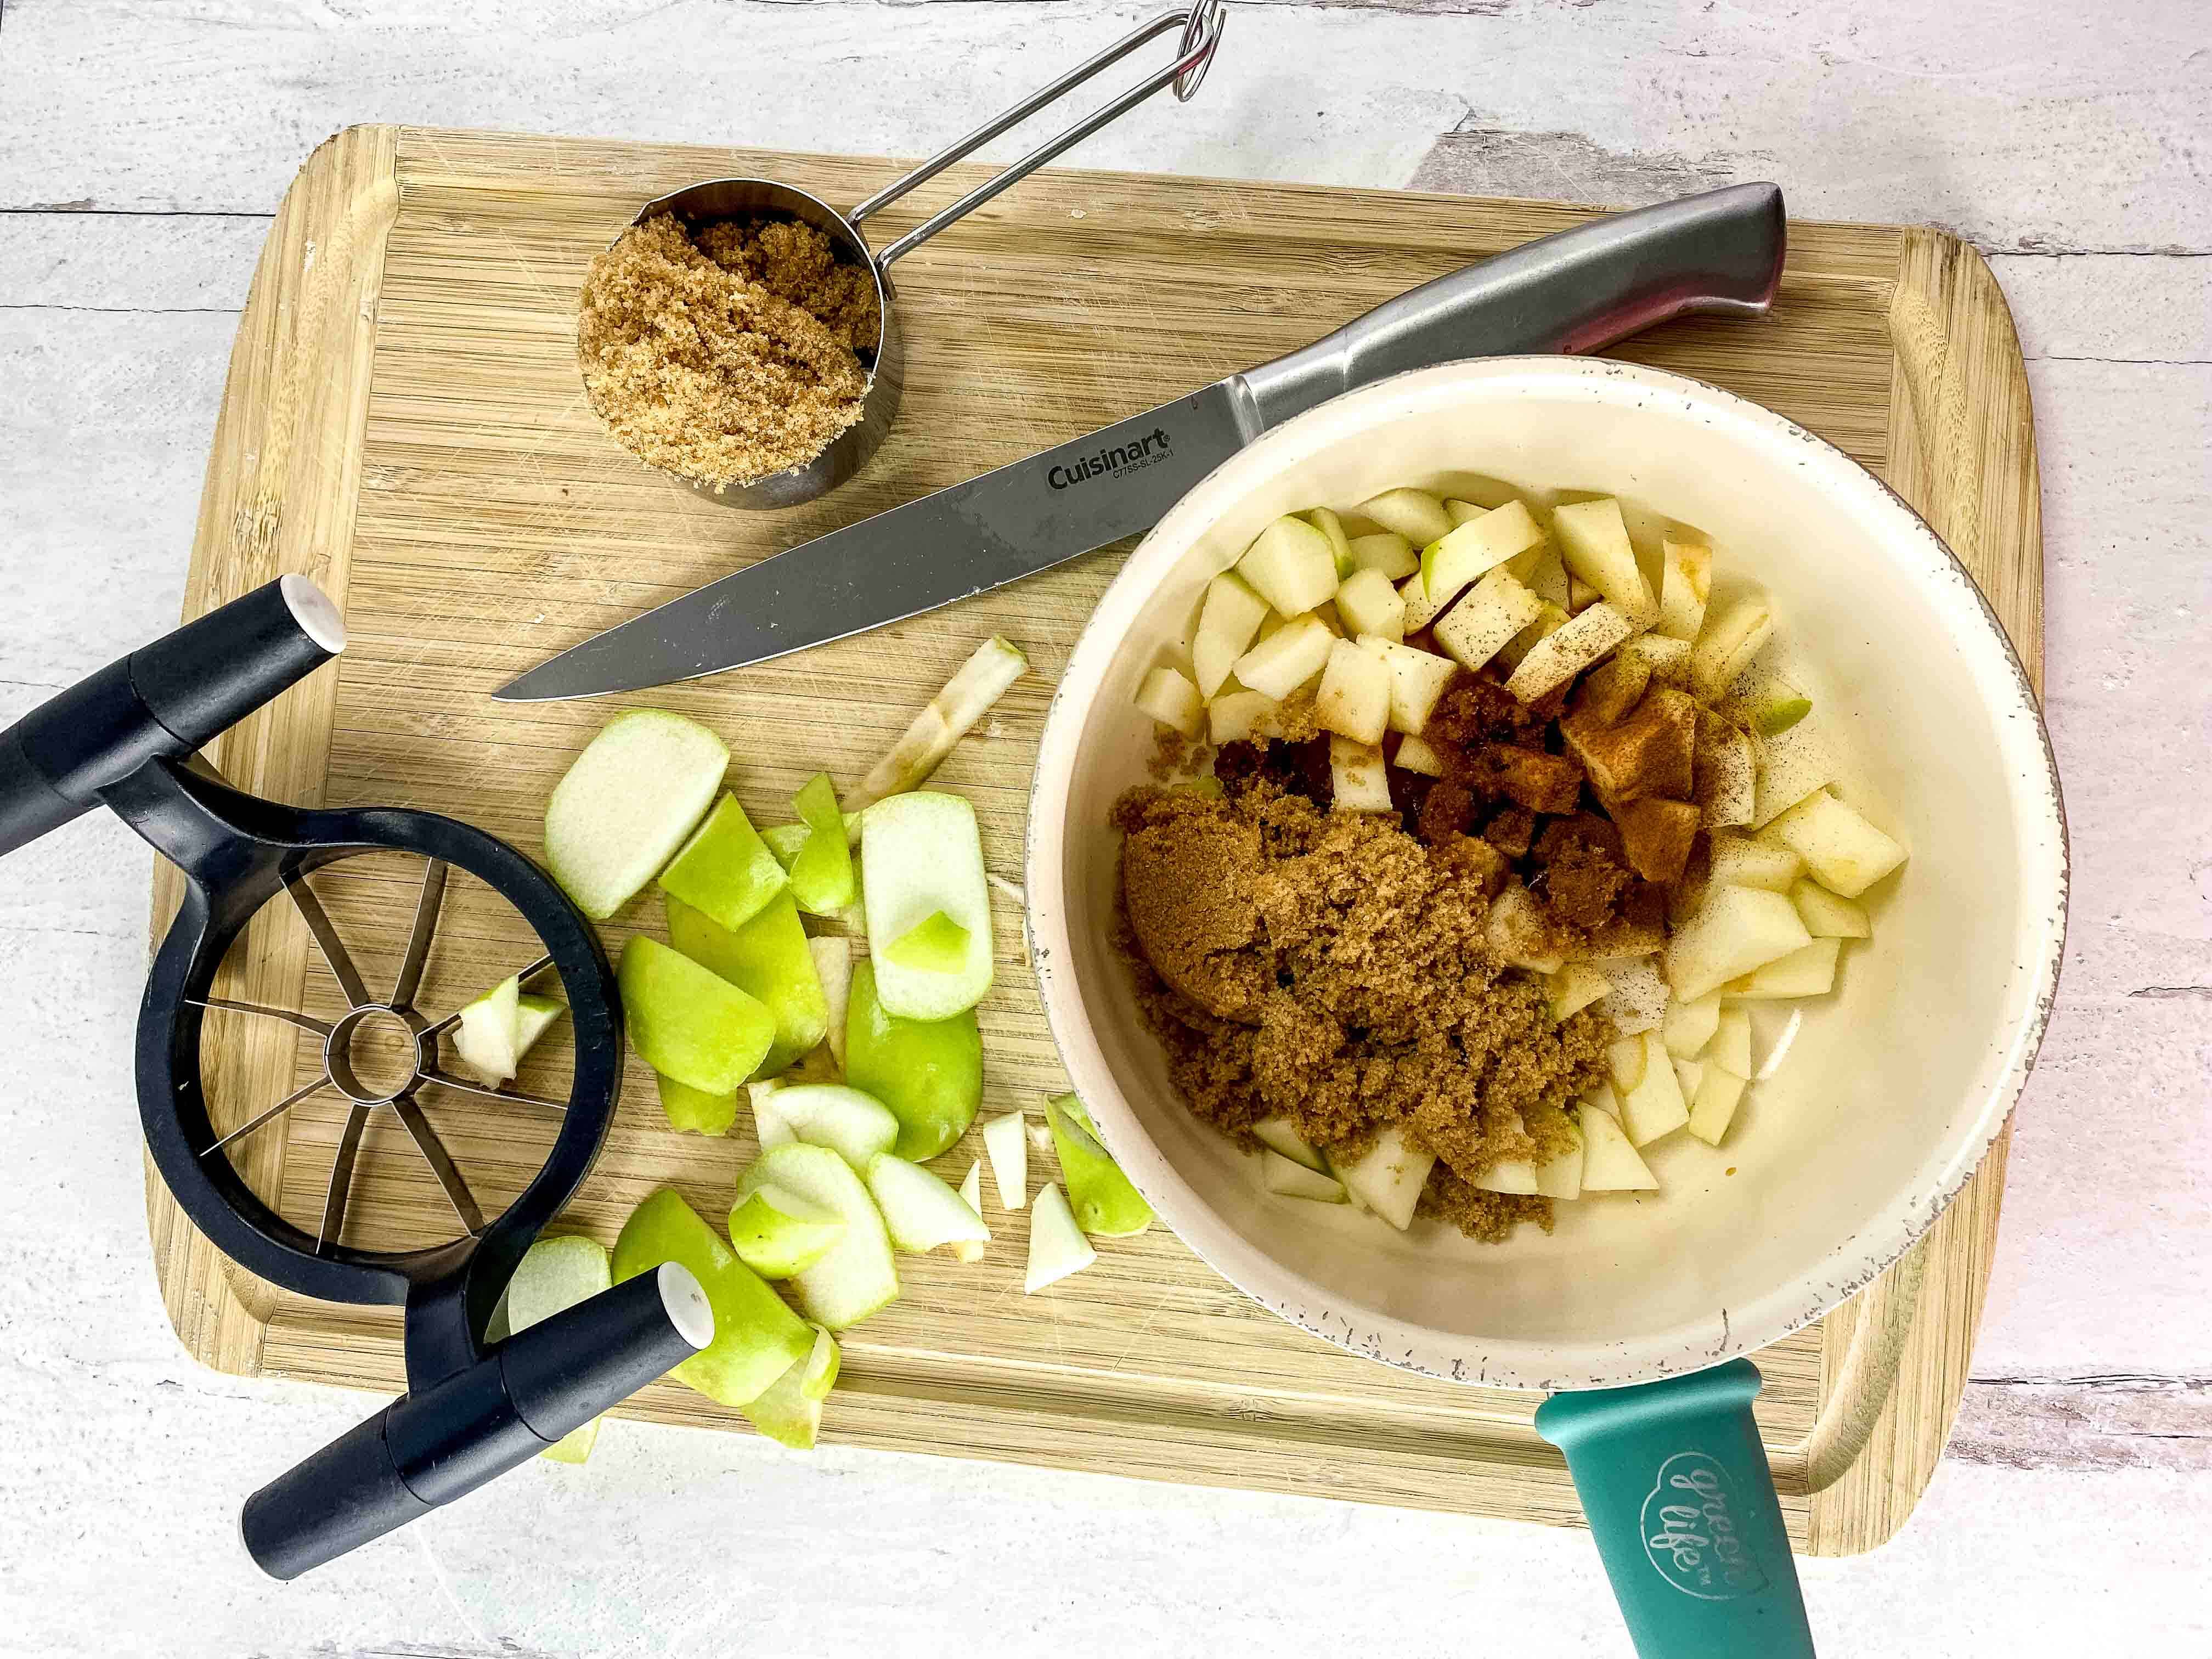 ingredients to make apple topping